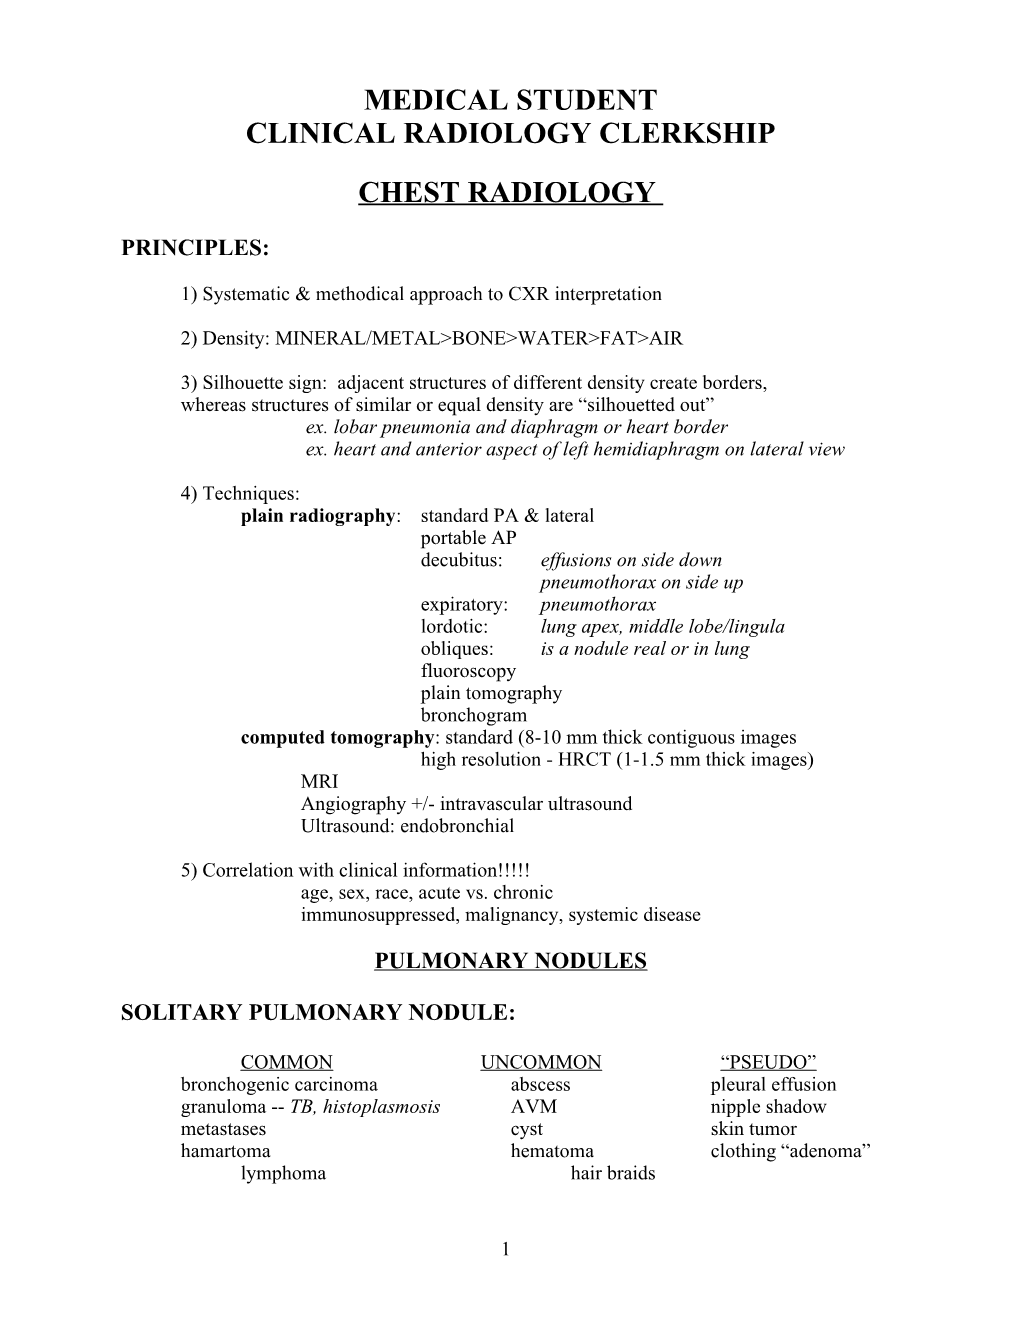 Clinical Radiology Clerkship